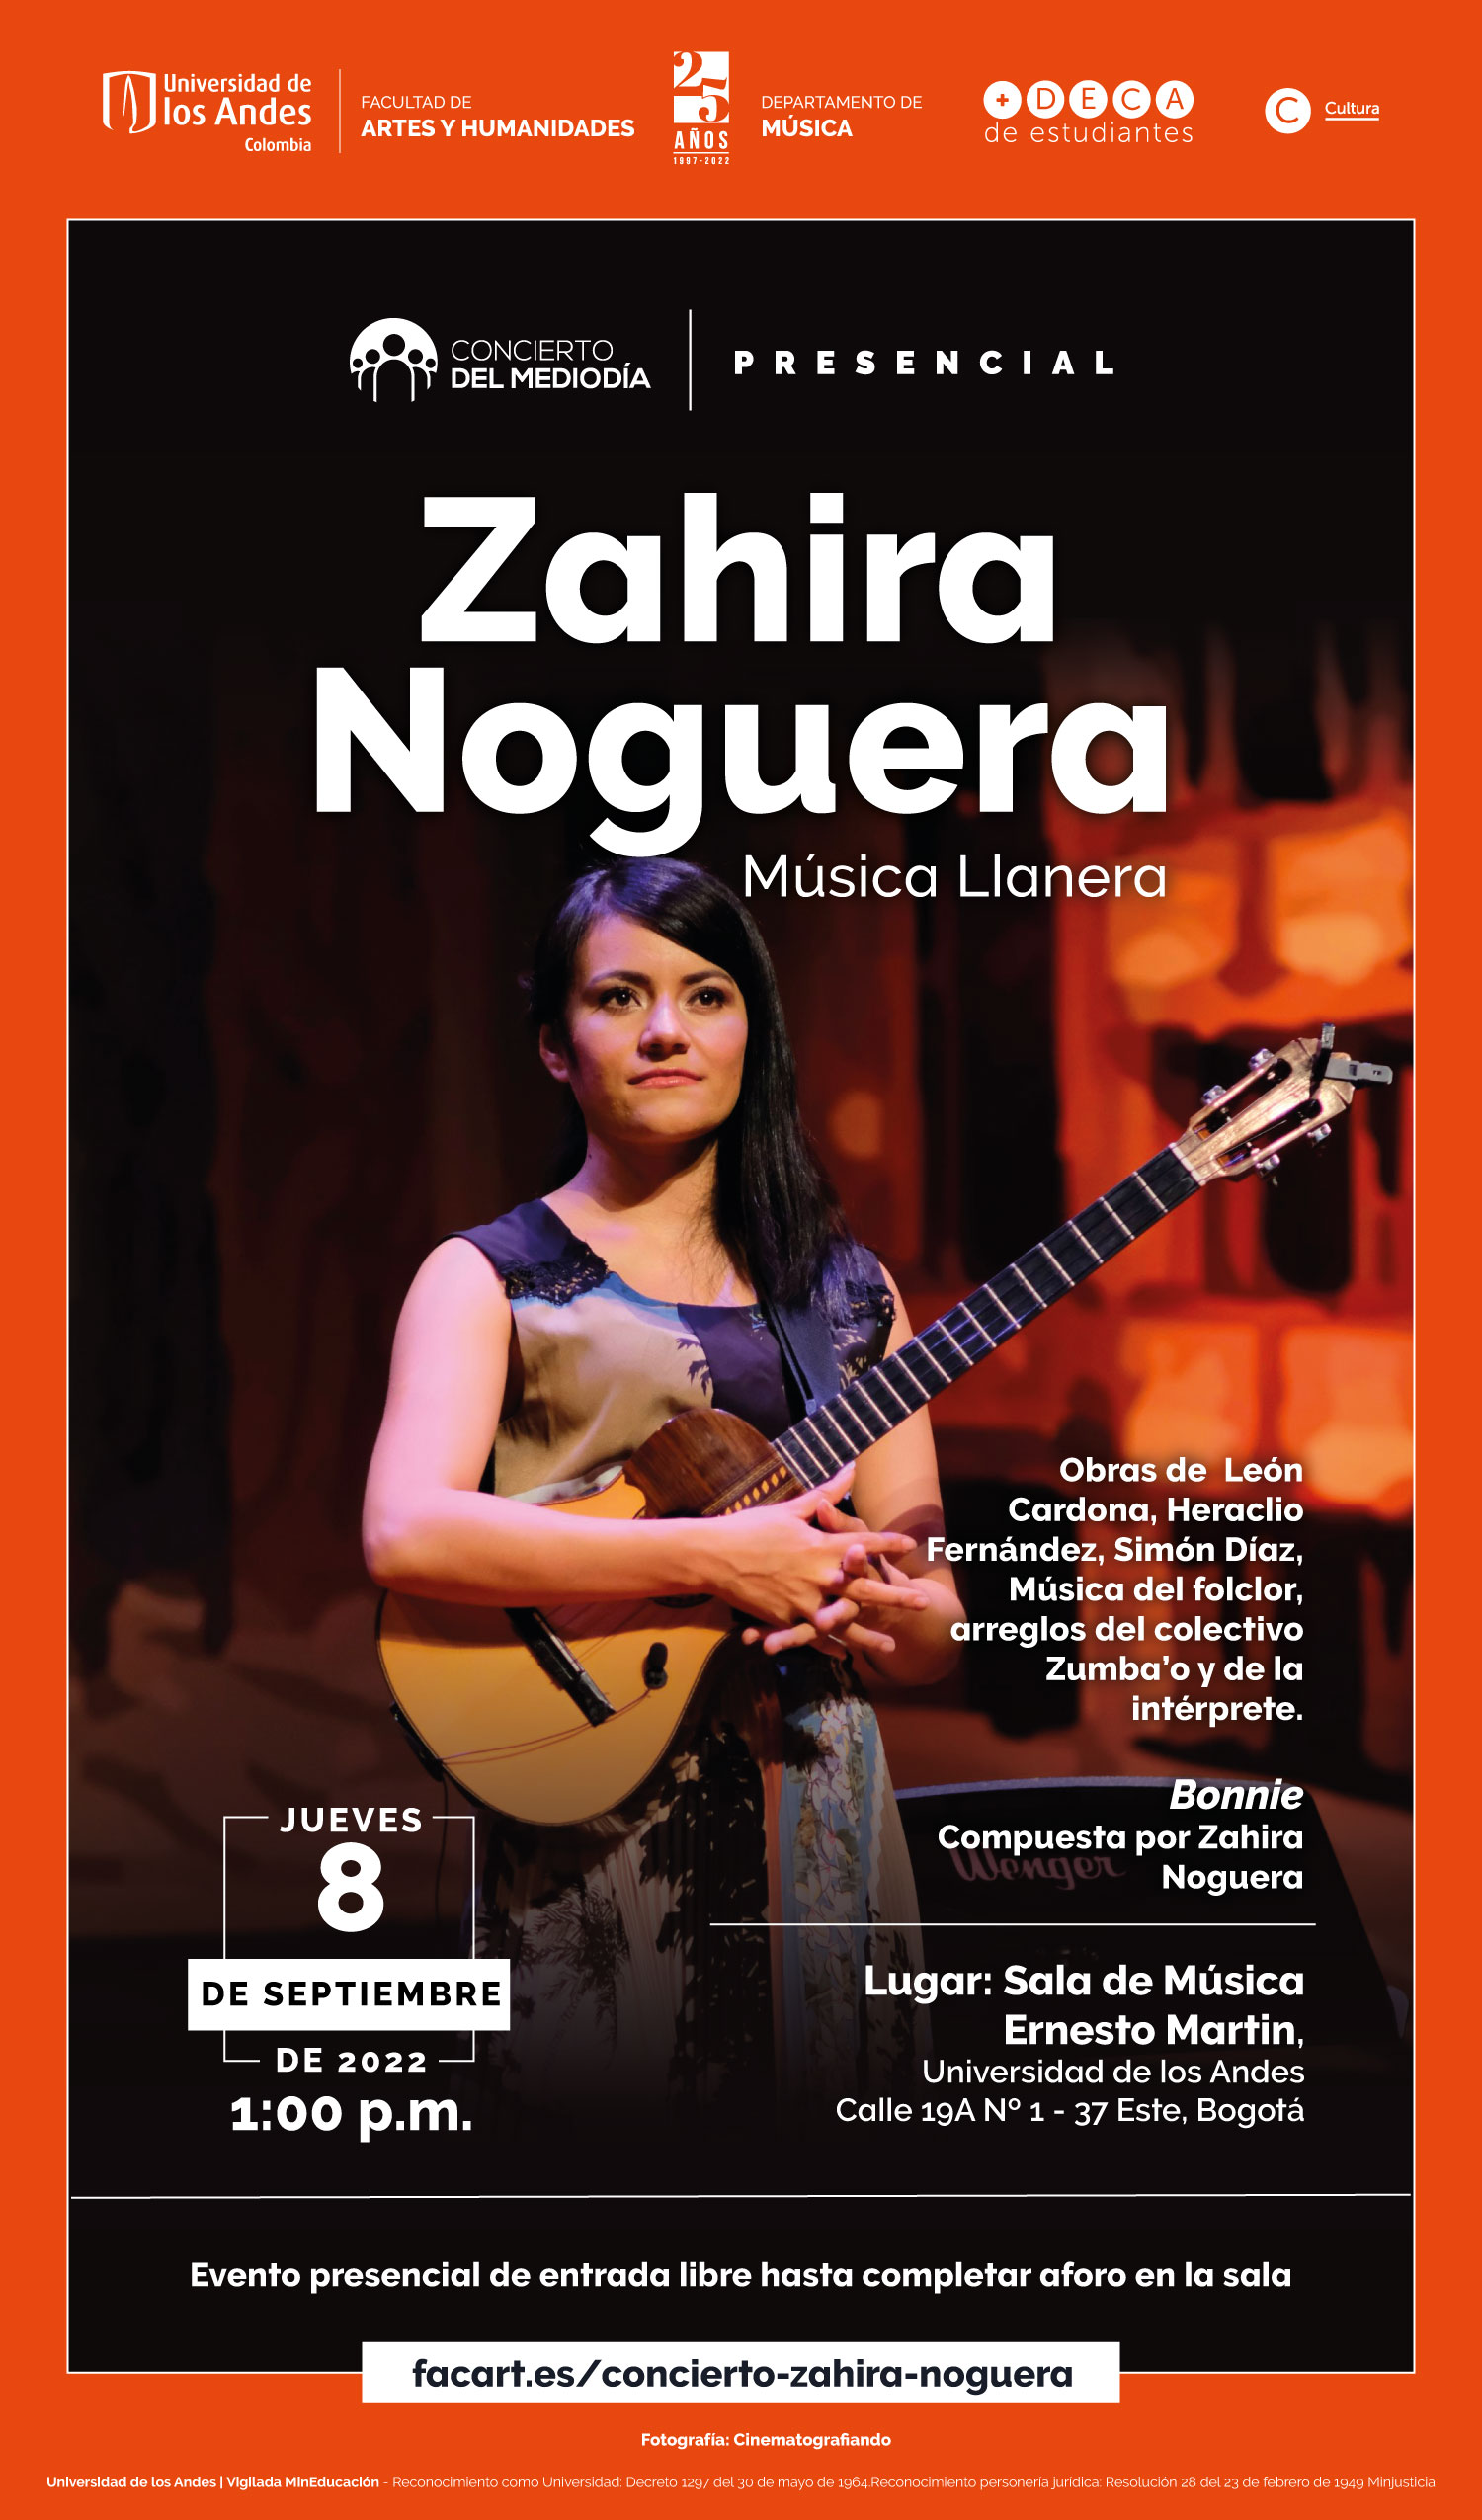 9-8-CMD-Zahira-Noguera